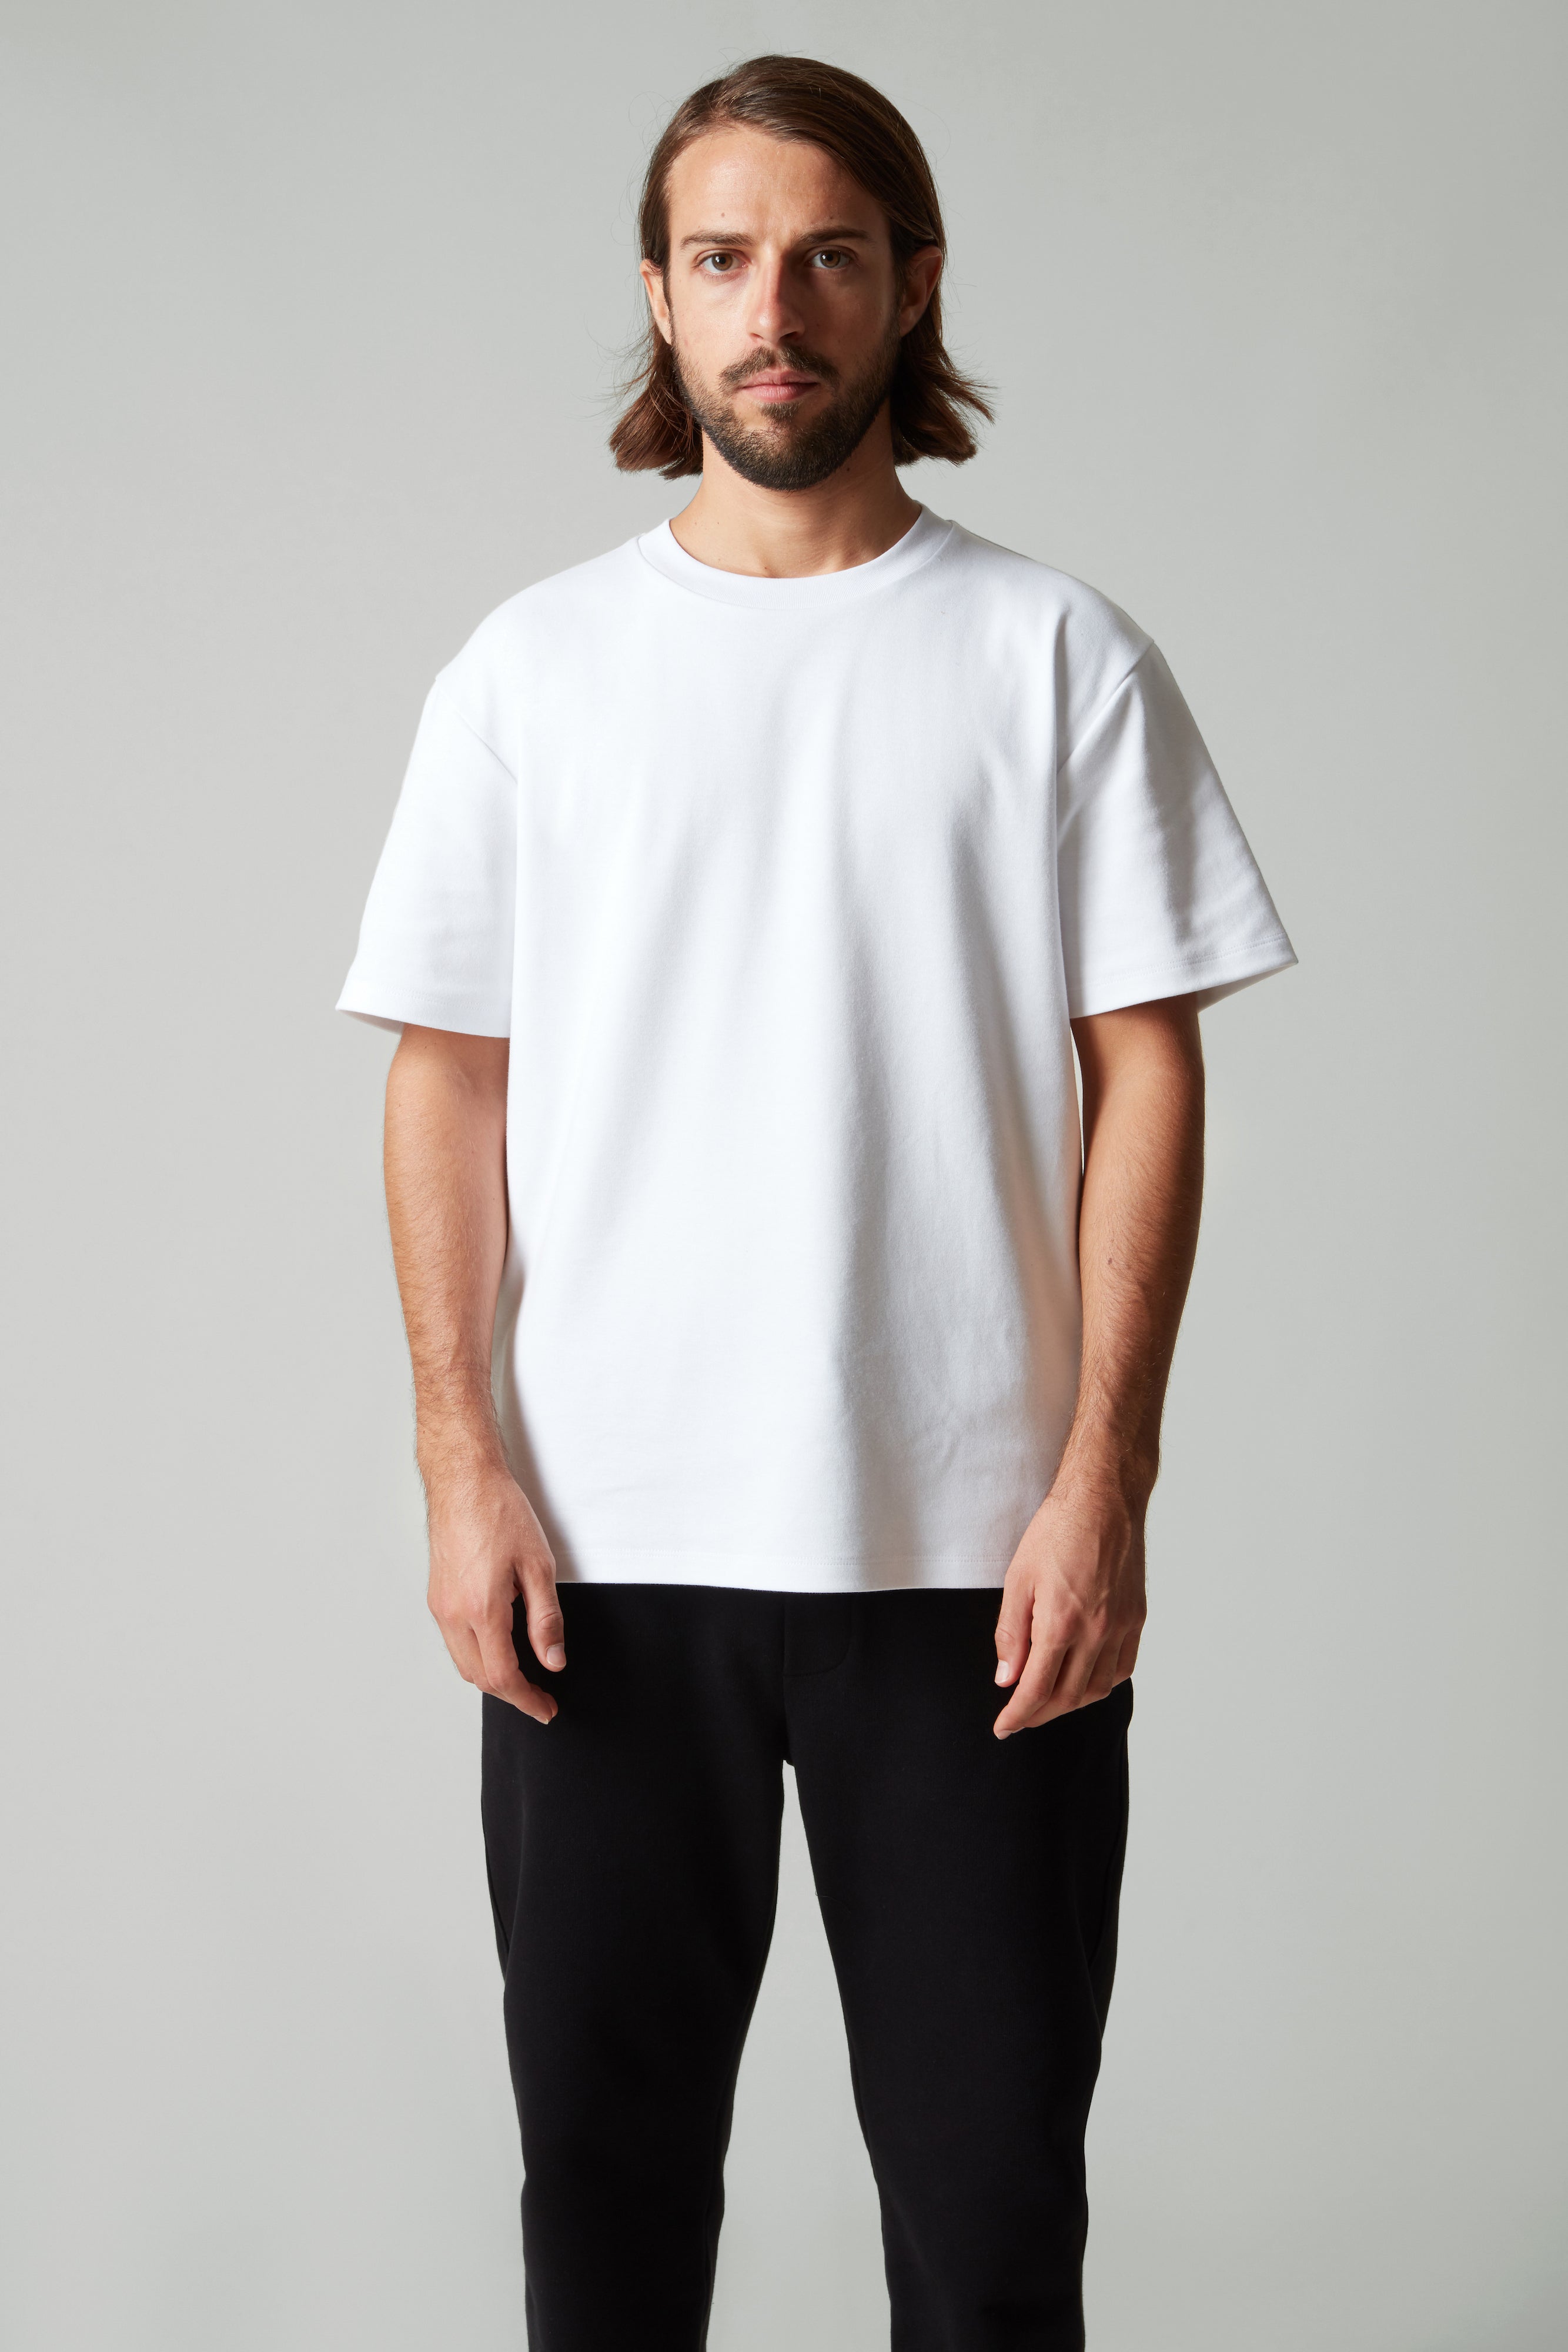 T-shirt TS1 Sample - White